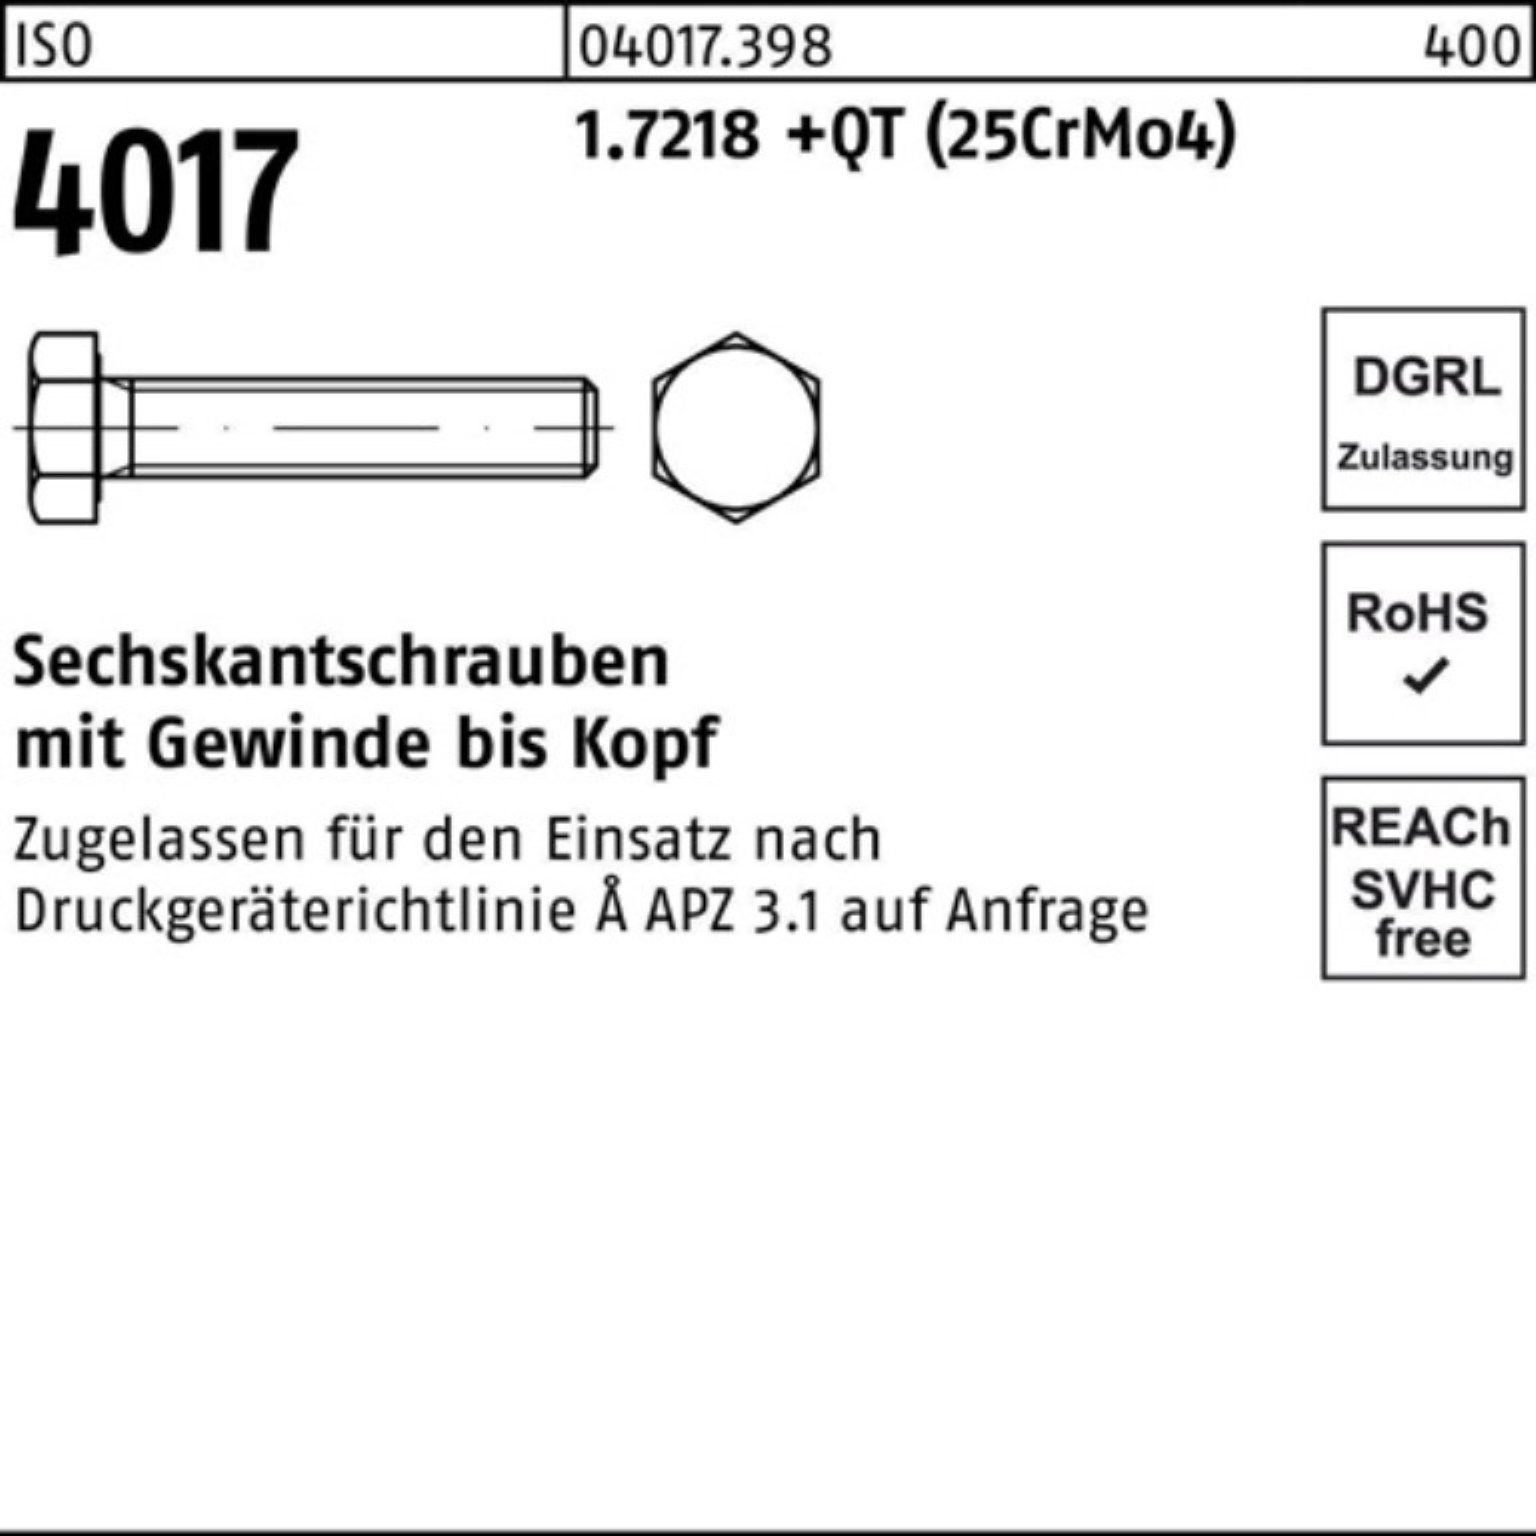 Sechskantschraube Sechskantschraube Bufab +QT Pack ISO (25CrMo4) VG 100er 1.7218 M24x 65 4017